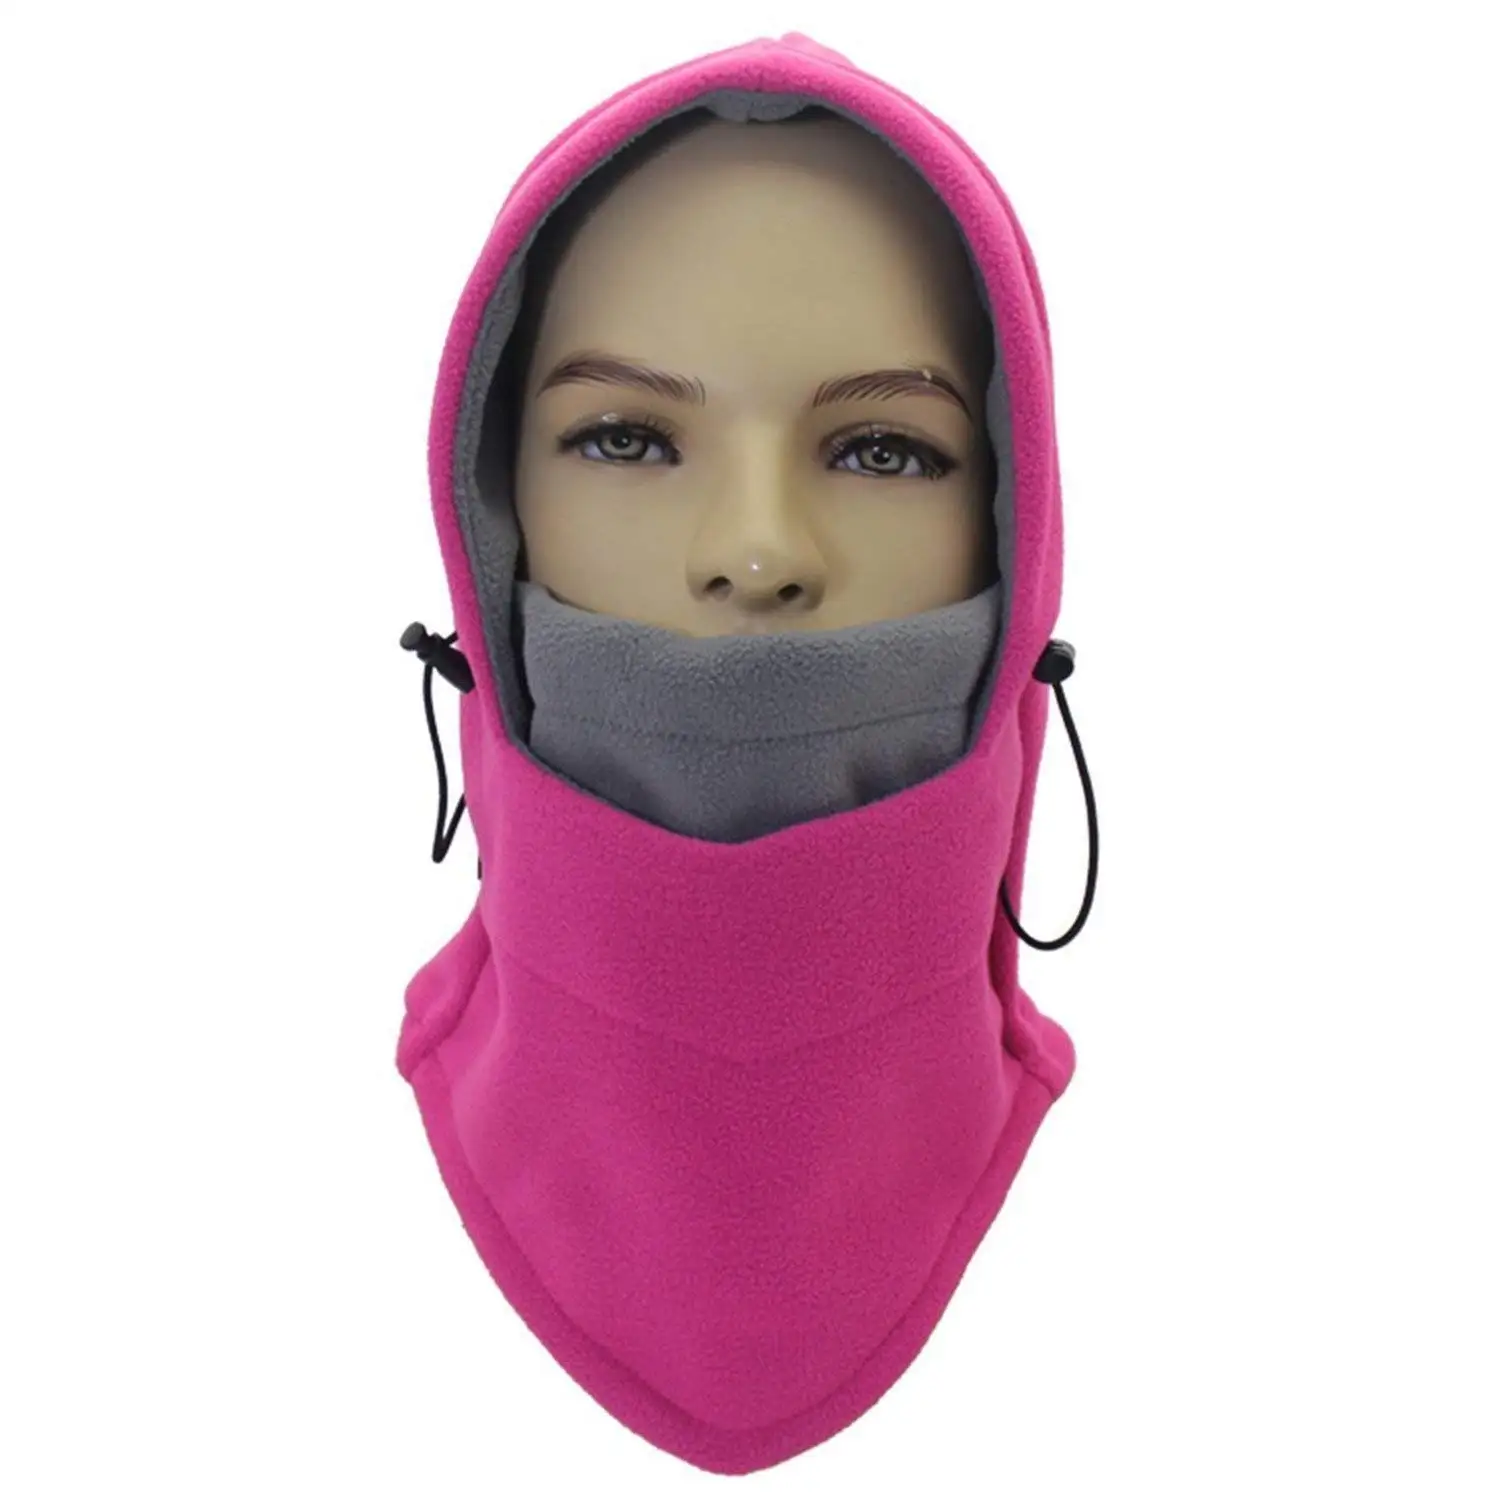 Buy Ski Face Mask, FILWO Face Tube Mask Windproof Warm Half Face Skiing ...